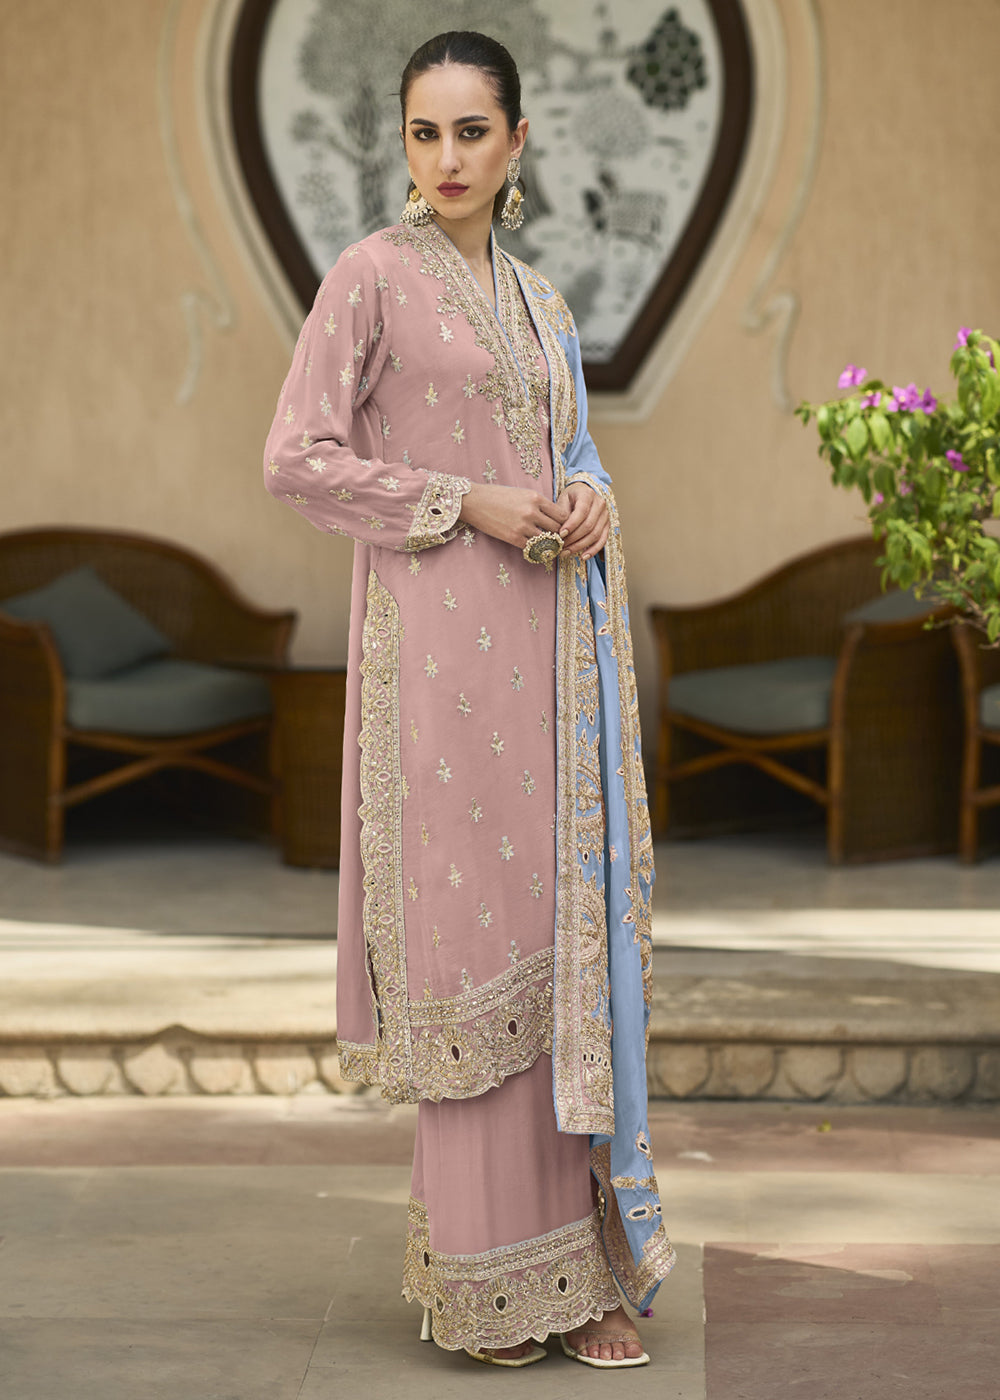 Buy Now Peachy Pink Semi Chiffon Pakistani Style Palazzo Suit Online in USA, UK, Canada, Germany, Australia & Worldwide at Empress Clothing. 